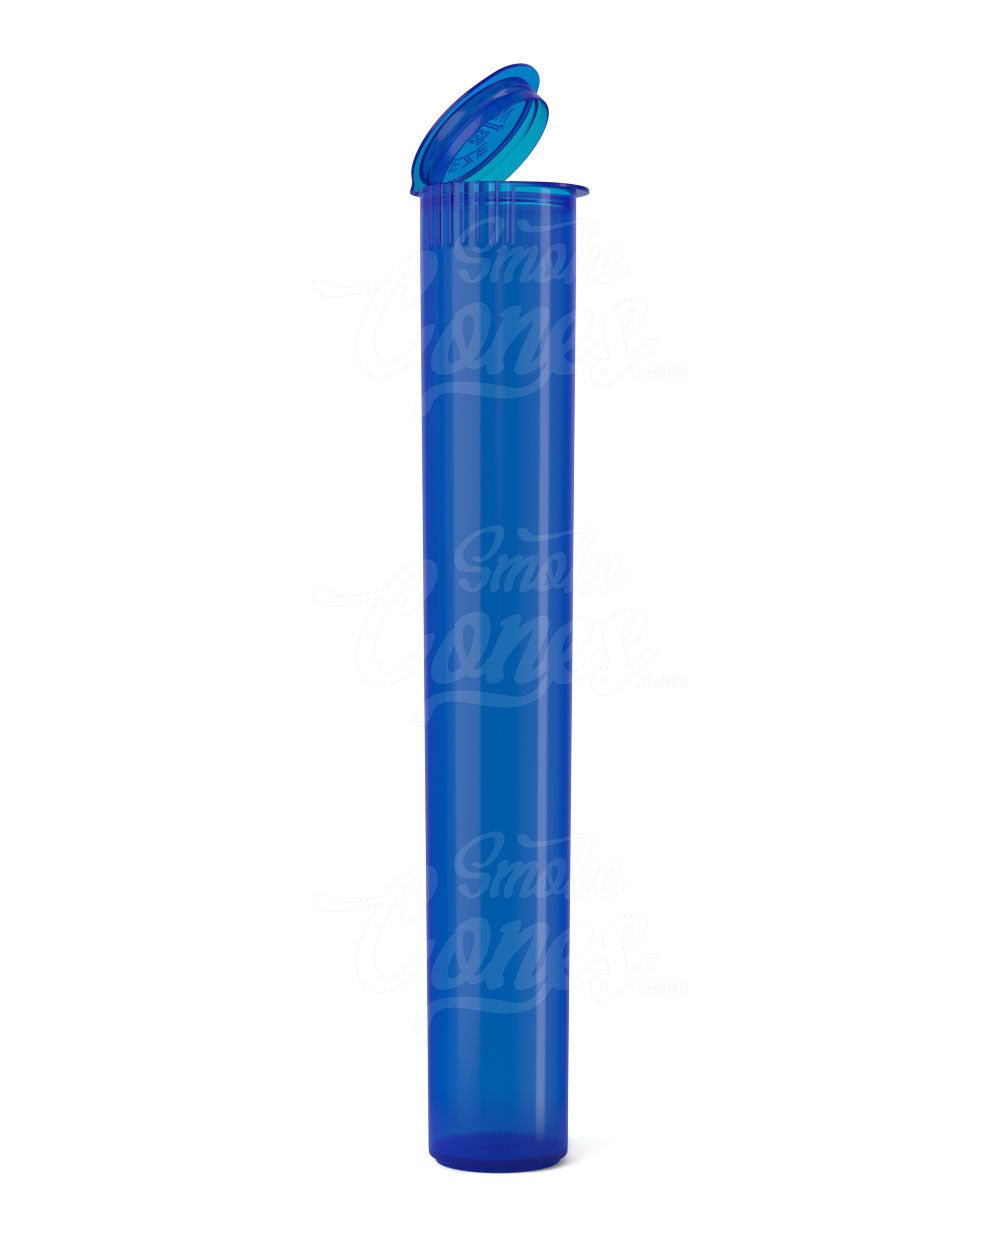 116mm Blue Translucent Child Resistant Pop Top Pre-Roll Tubes 1000/Box - 1